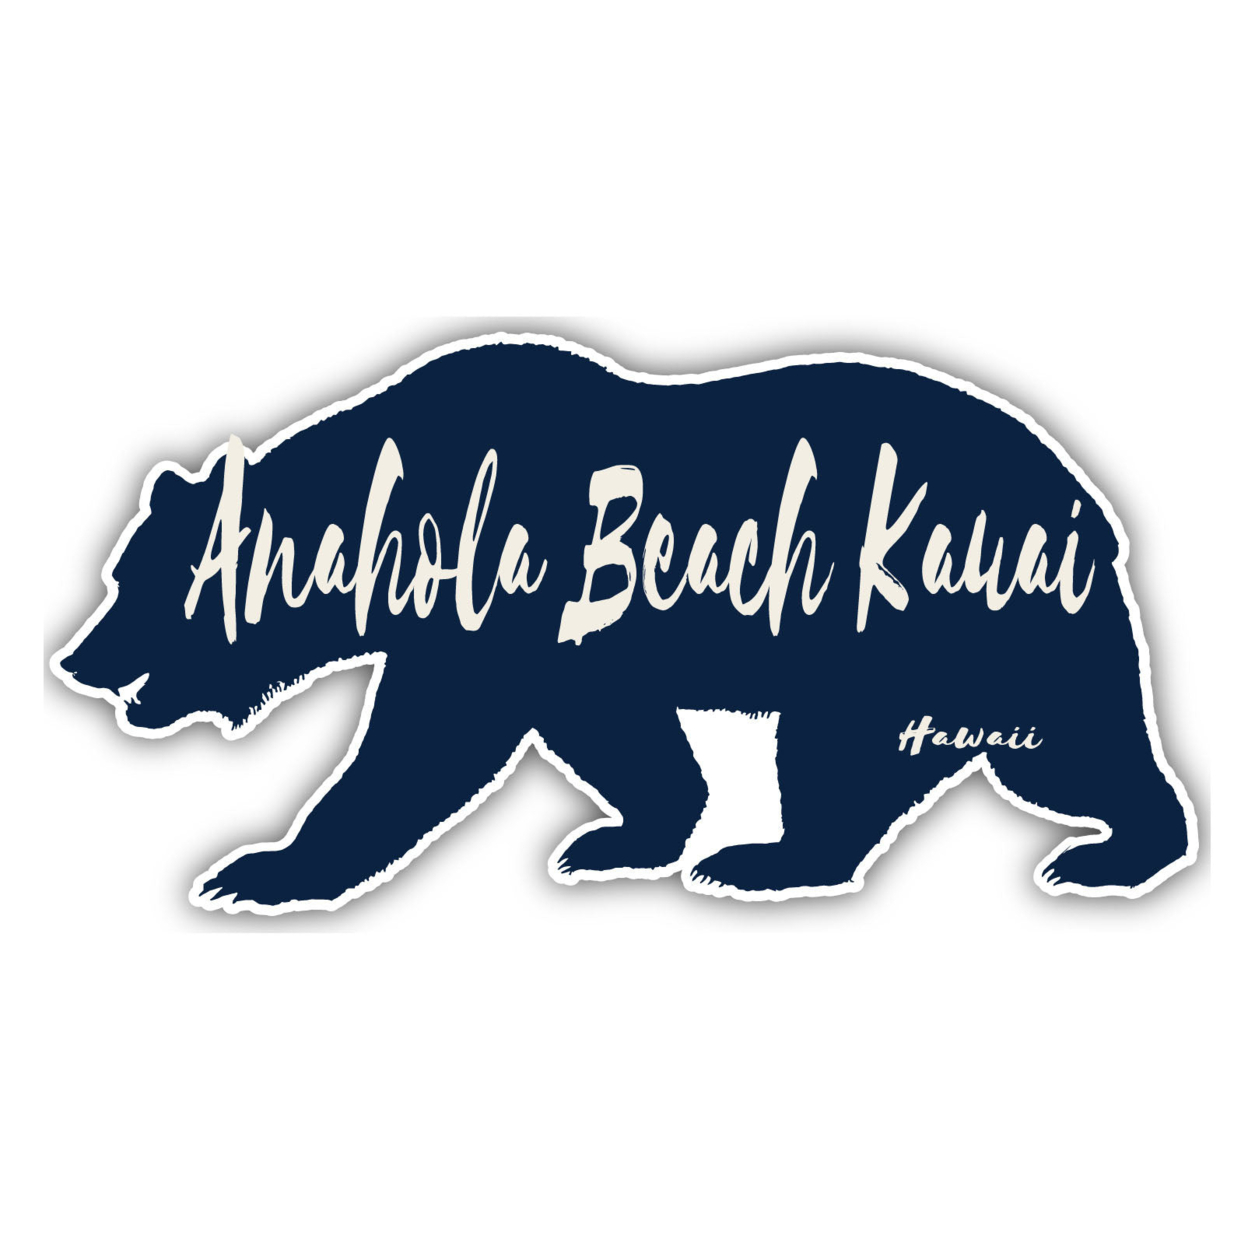 Anahola Beach Kauai Hawaii Souvenir Decorative Stickers (Choose Theme And Size) - Single Unit, 12-Inch, Bear